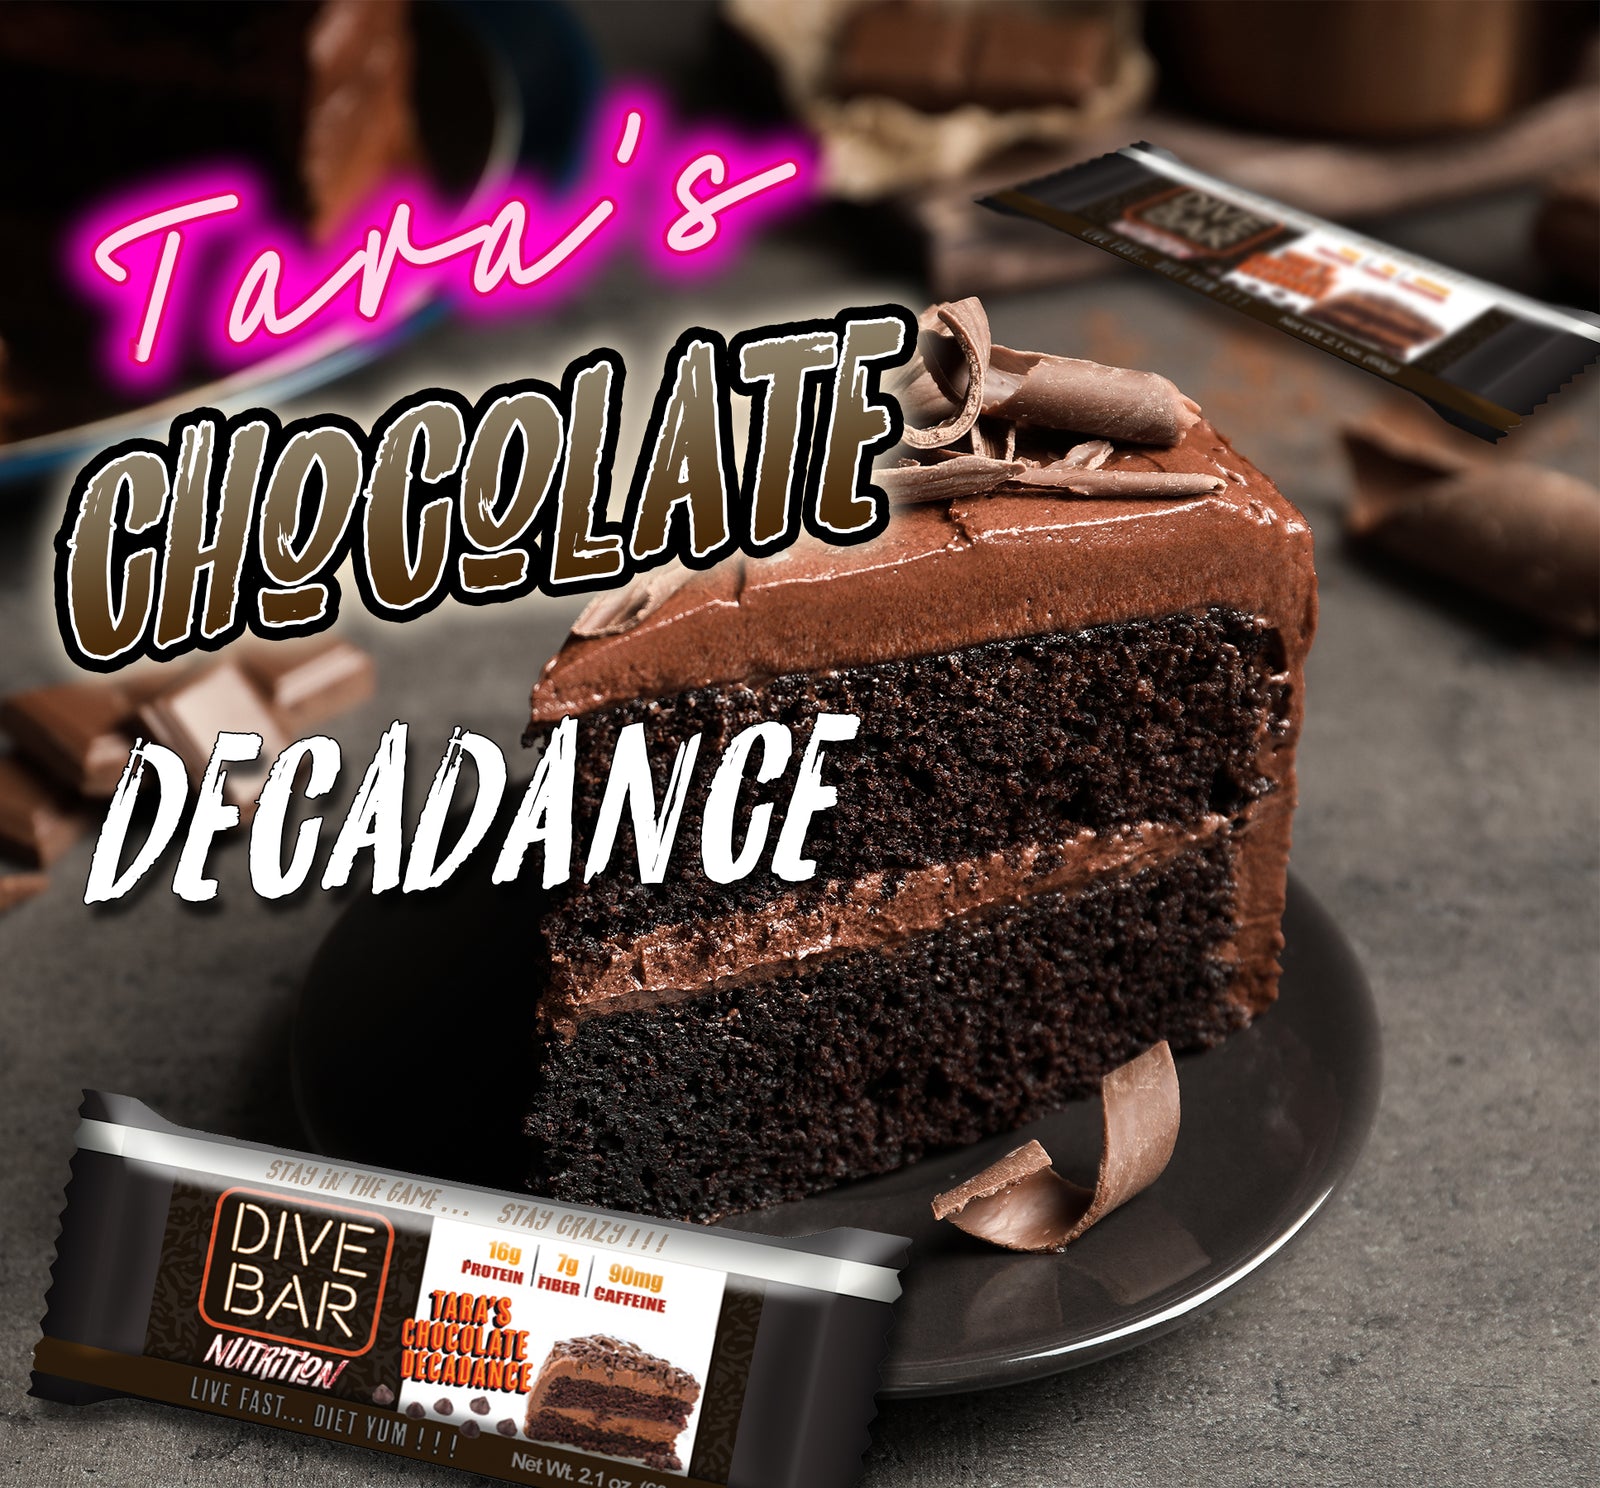 Taras's Chocolate DECADANCE -6 bars